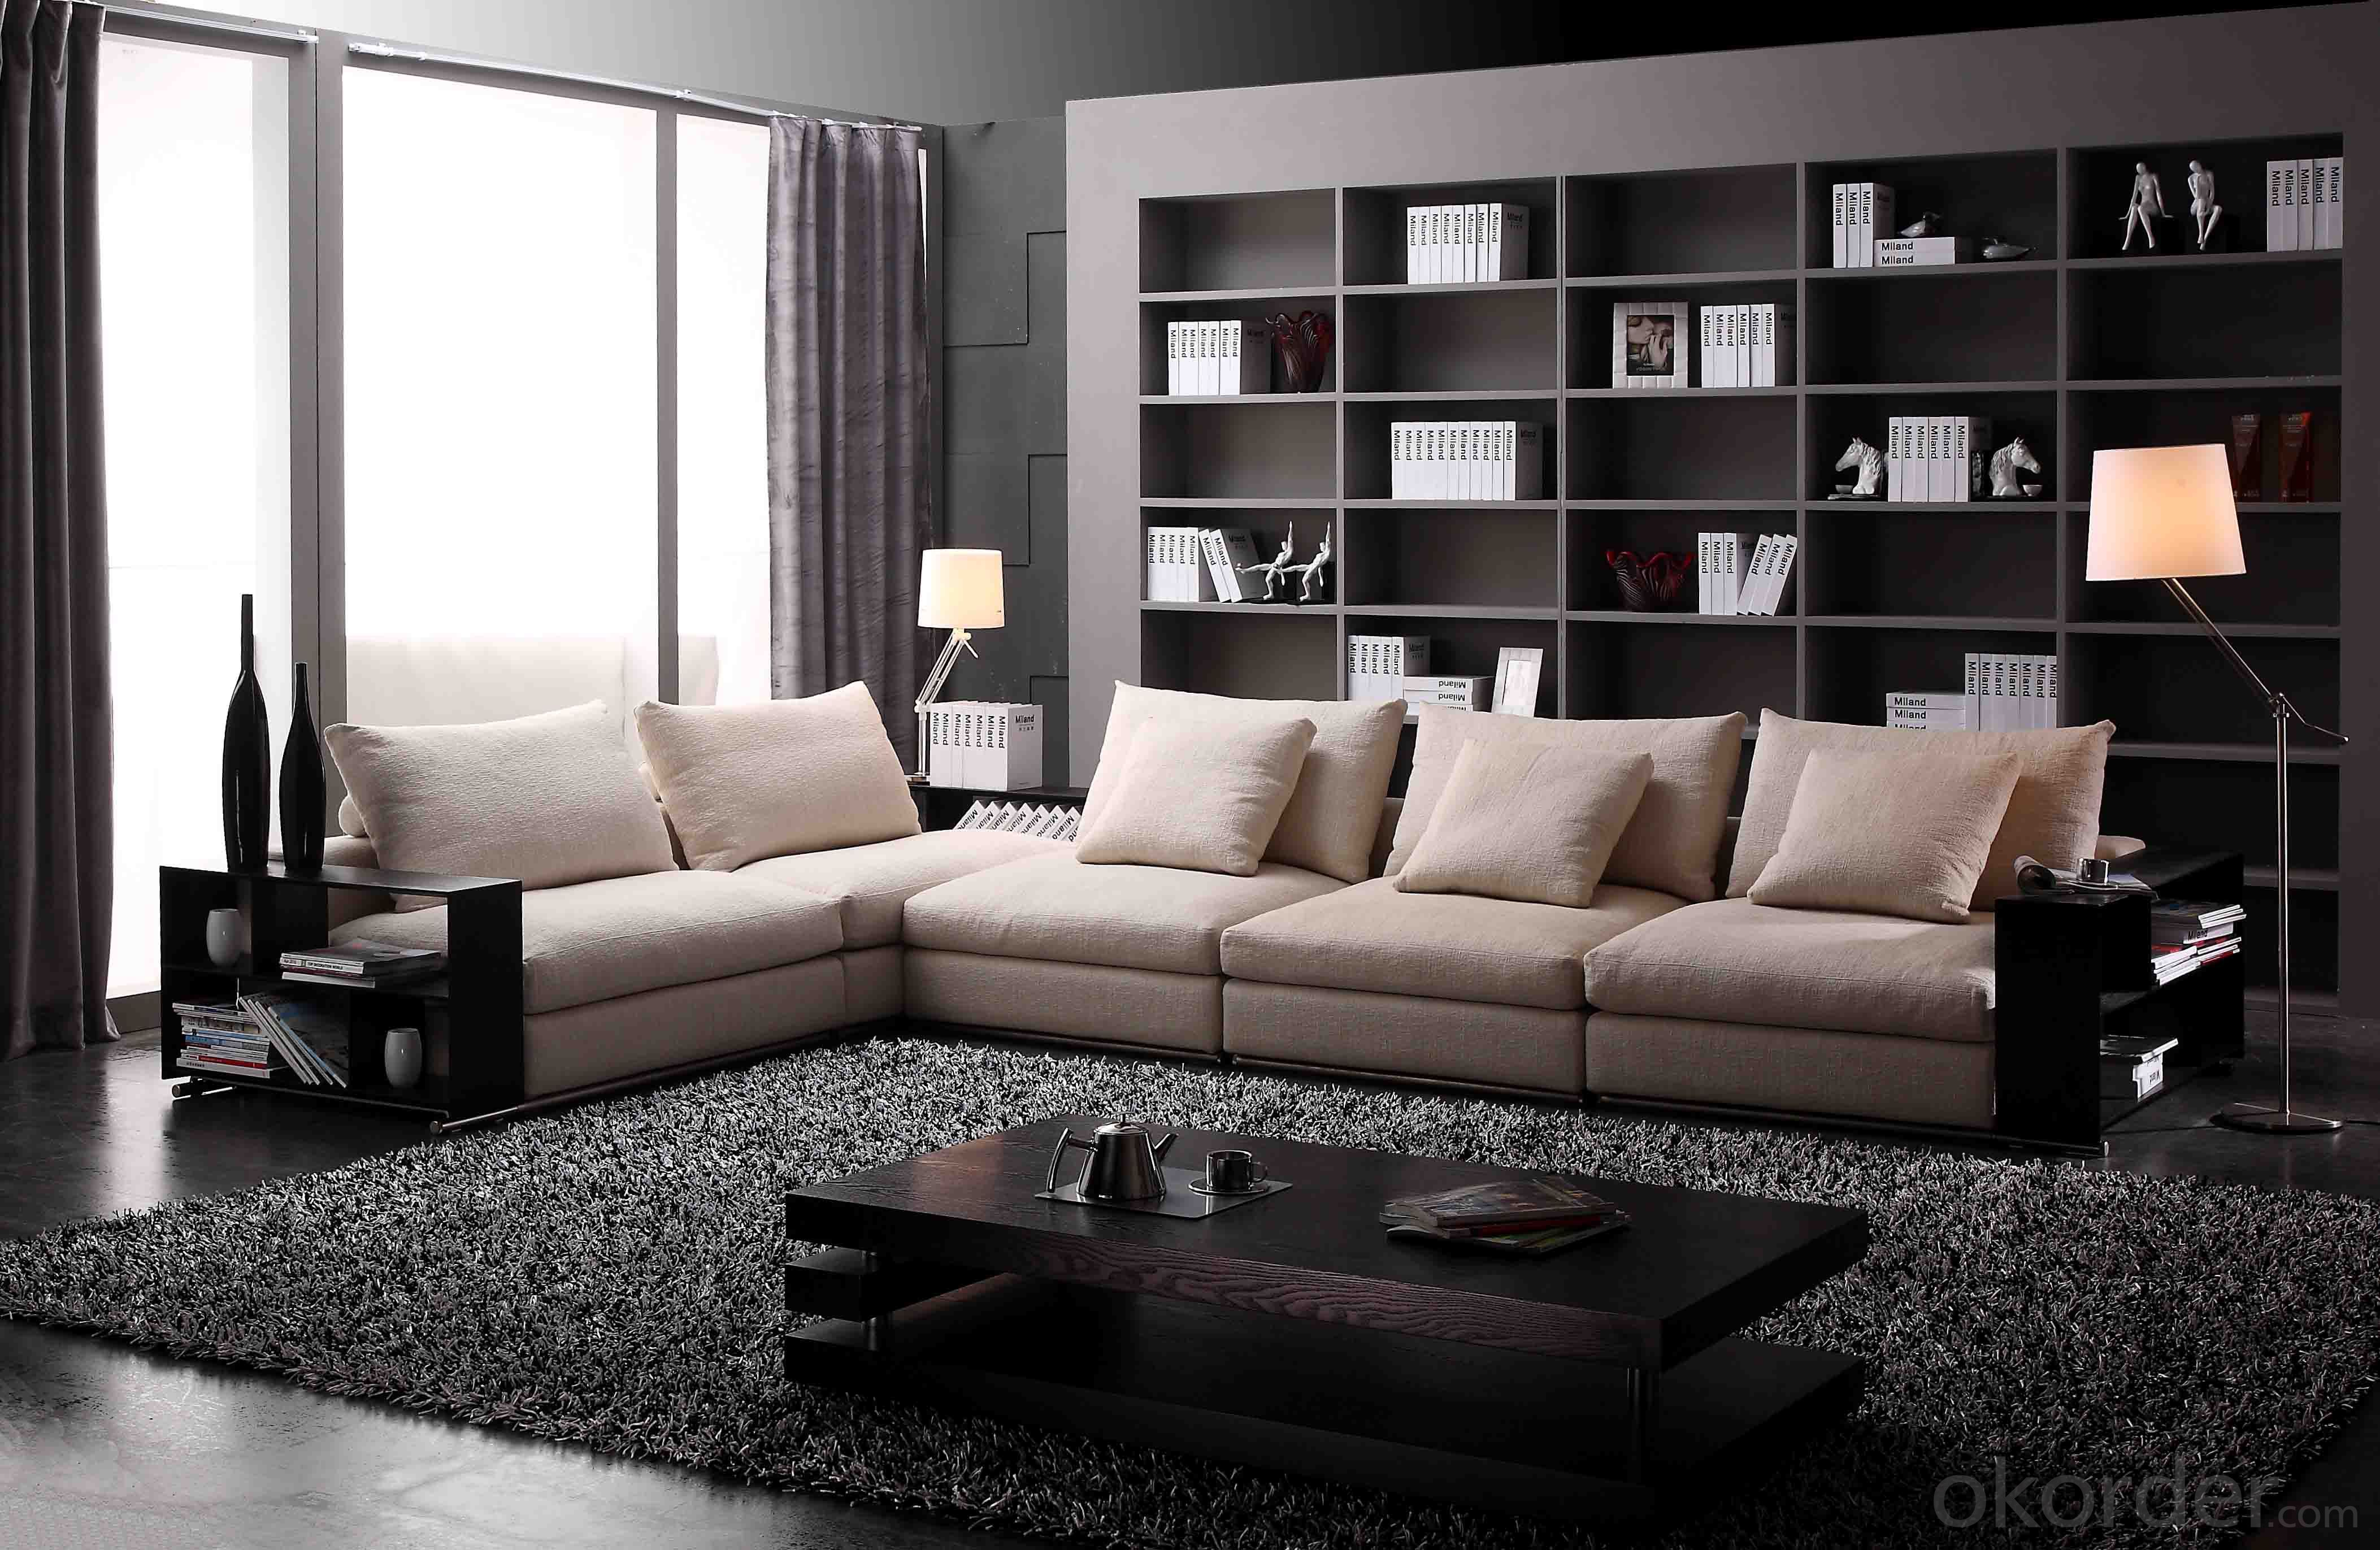 CNM Classic sofa and bed homeroom sets CMAX-18